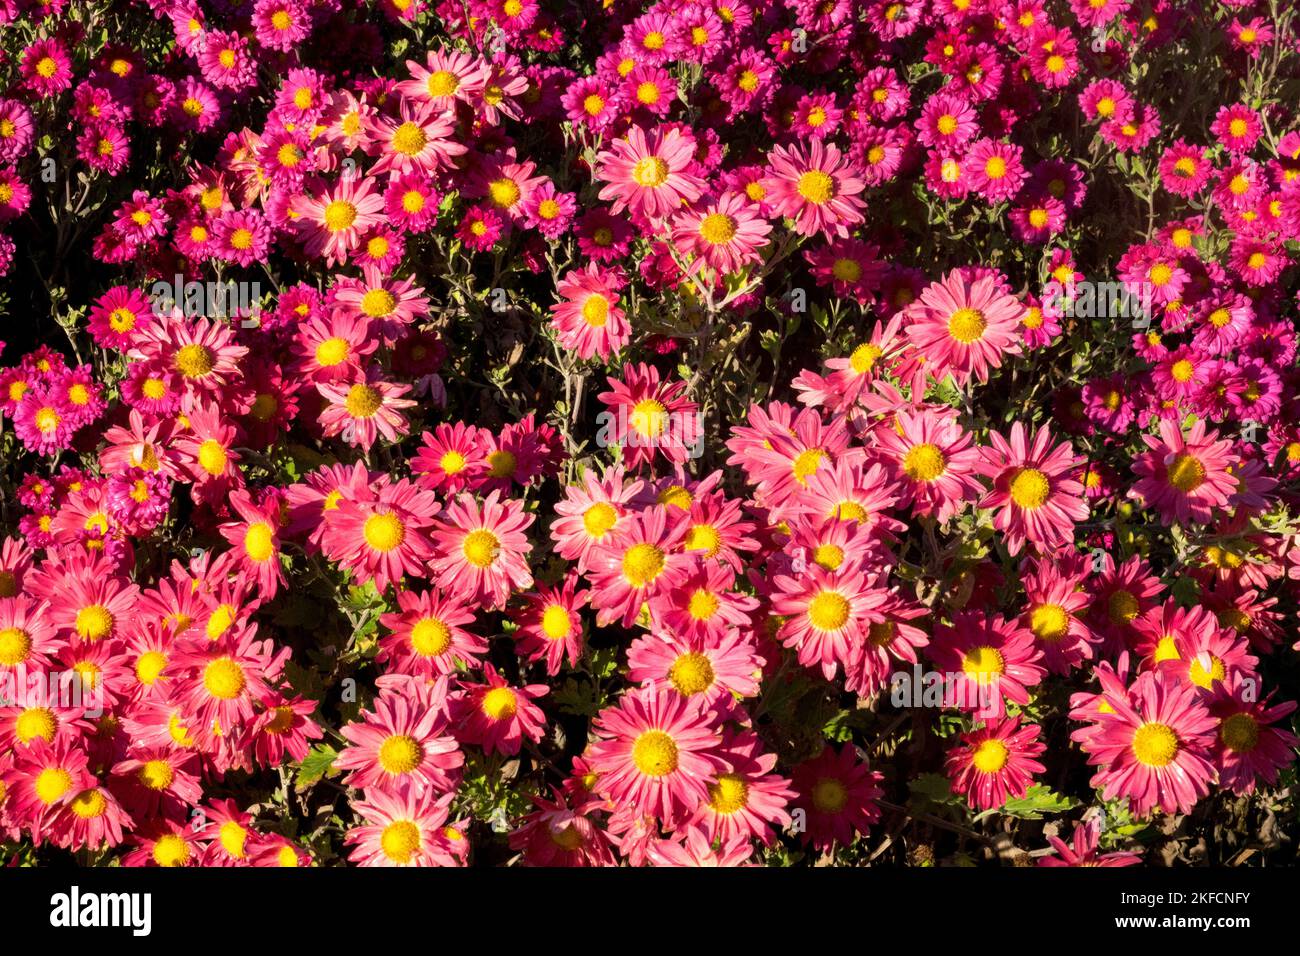 Autumn, Flowers, Red, Rose, Mums, Flowering, Dendranthema, Chrysanthemum, Season, Plants Chrysanthemum 'Herbstrose' Stock Photo